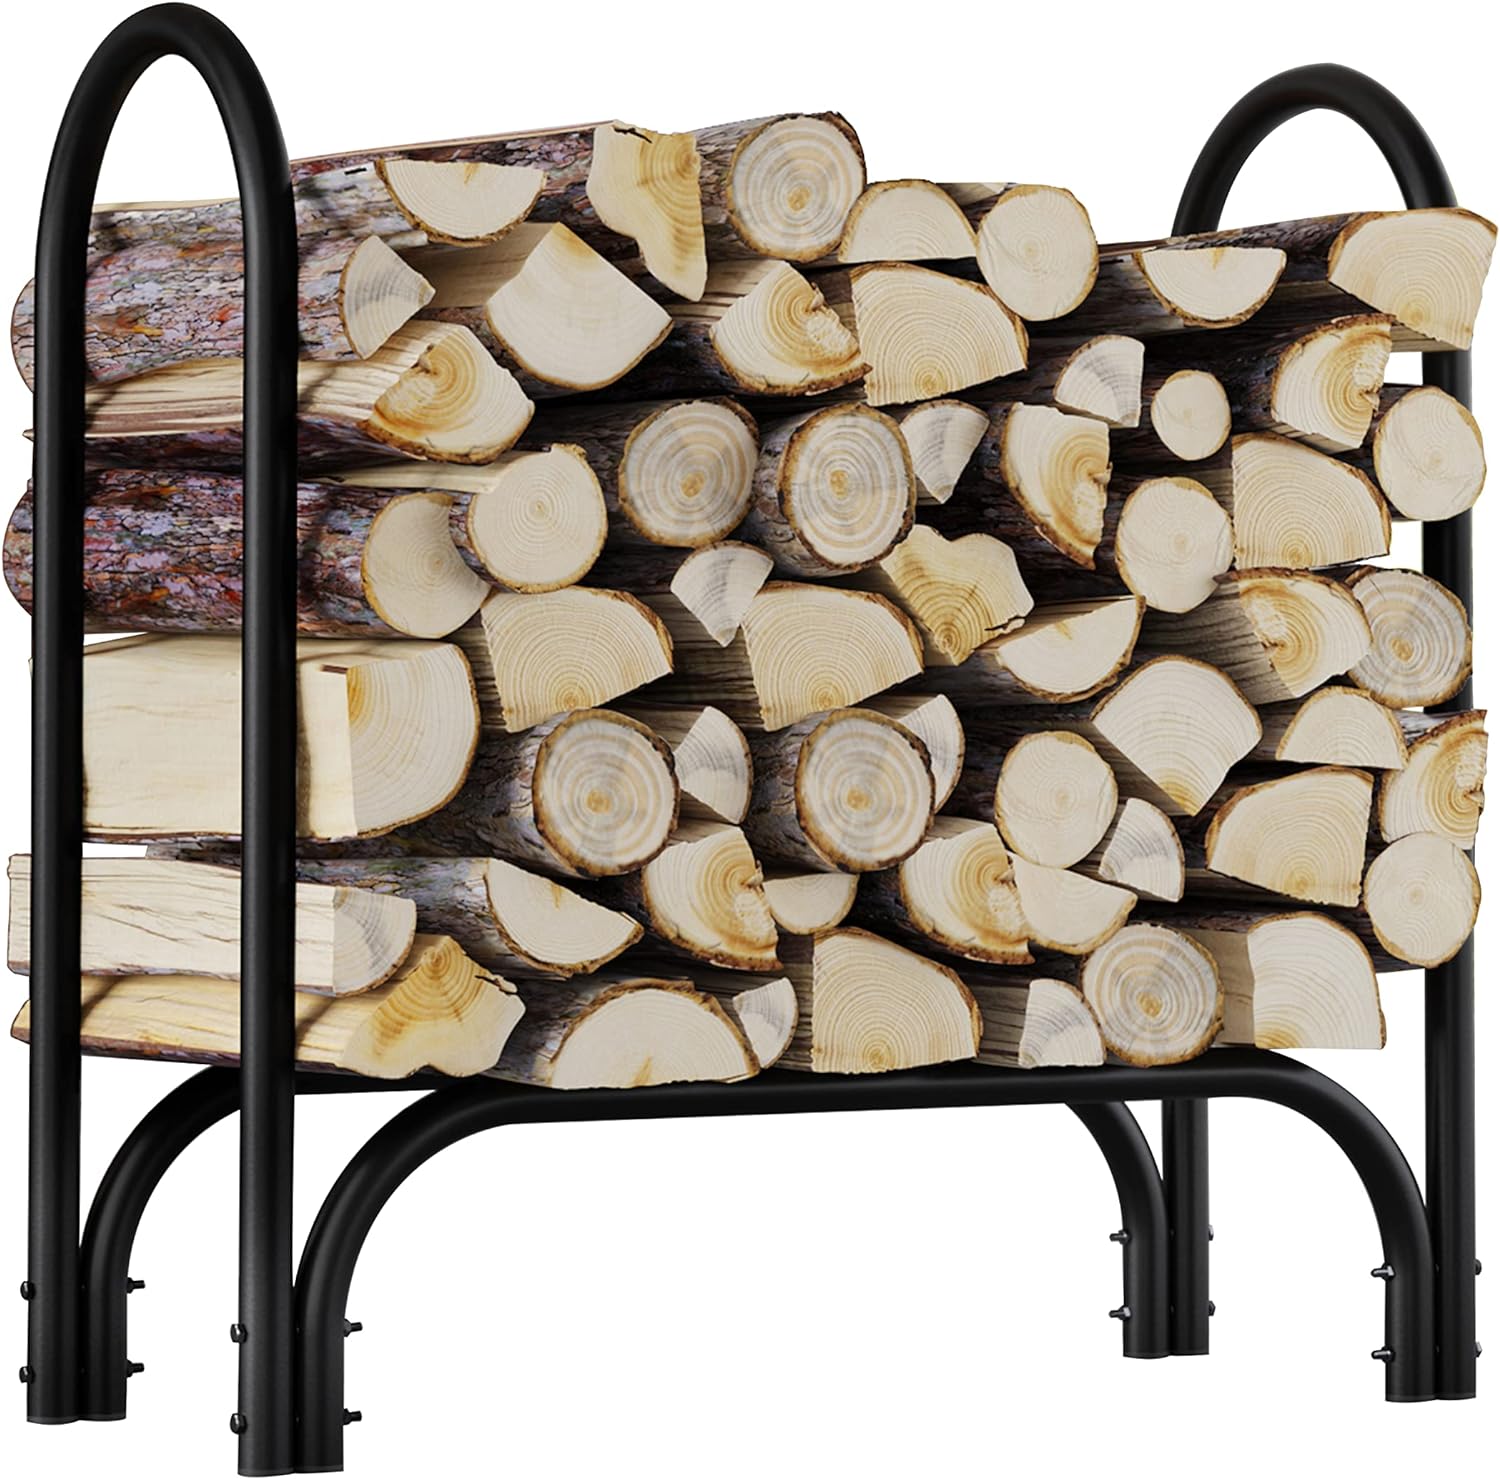 Fire Beauty Firewood Rack Log Holder,Log Storage Holder,Storage